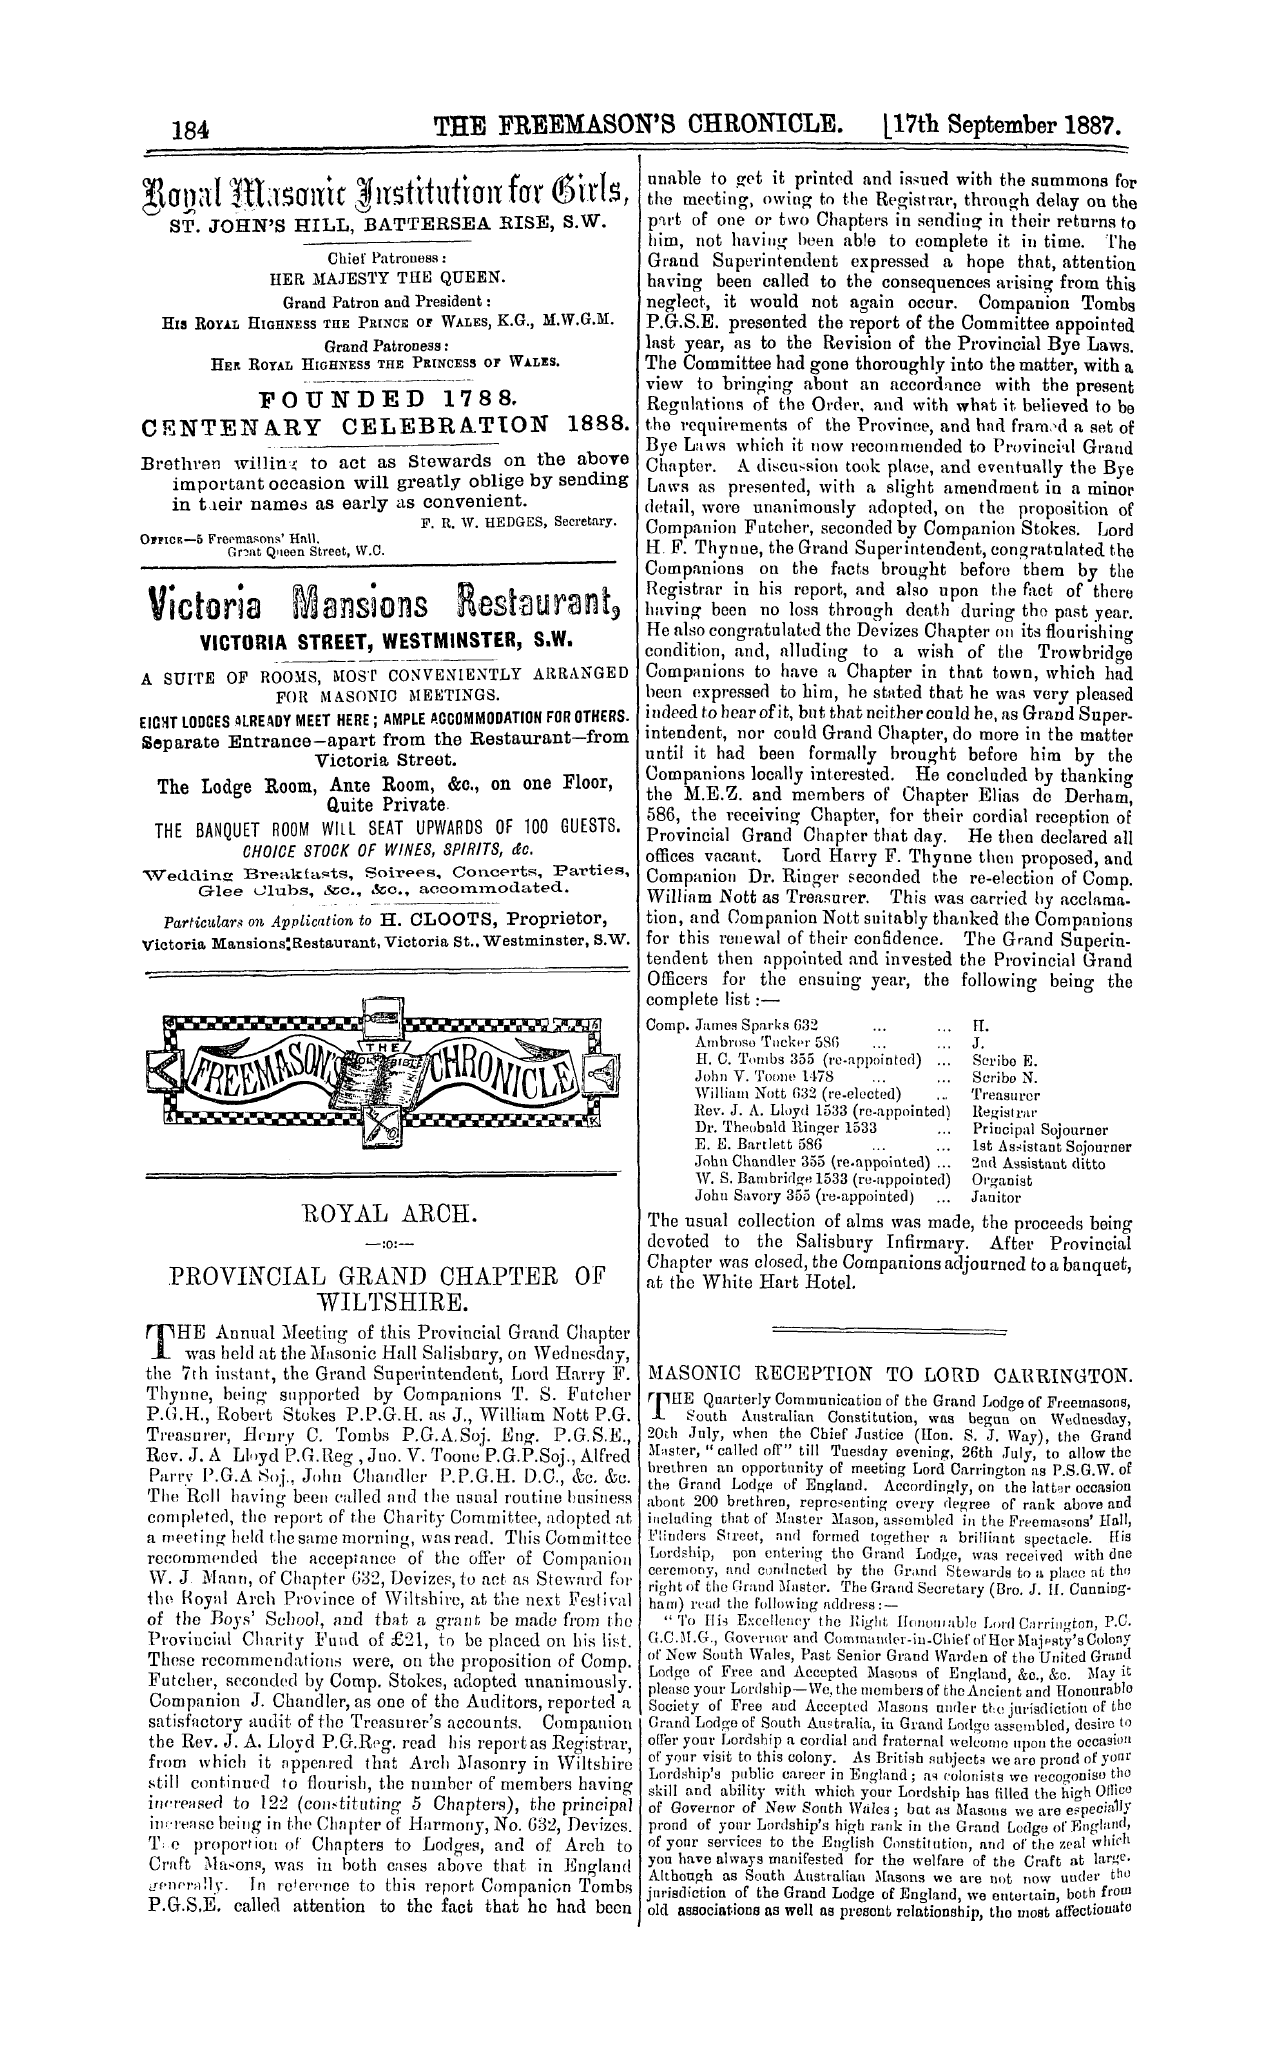 The Freemason's Chronicle: 1887-09-17 - Masonic Reception To Lord Carrington.